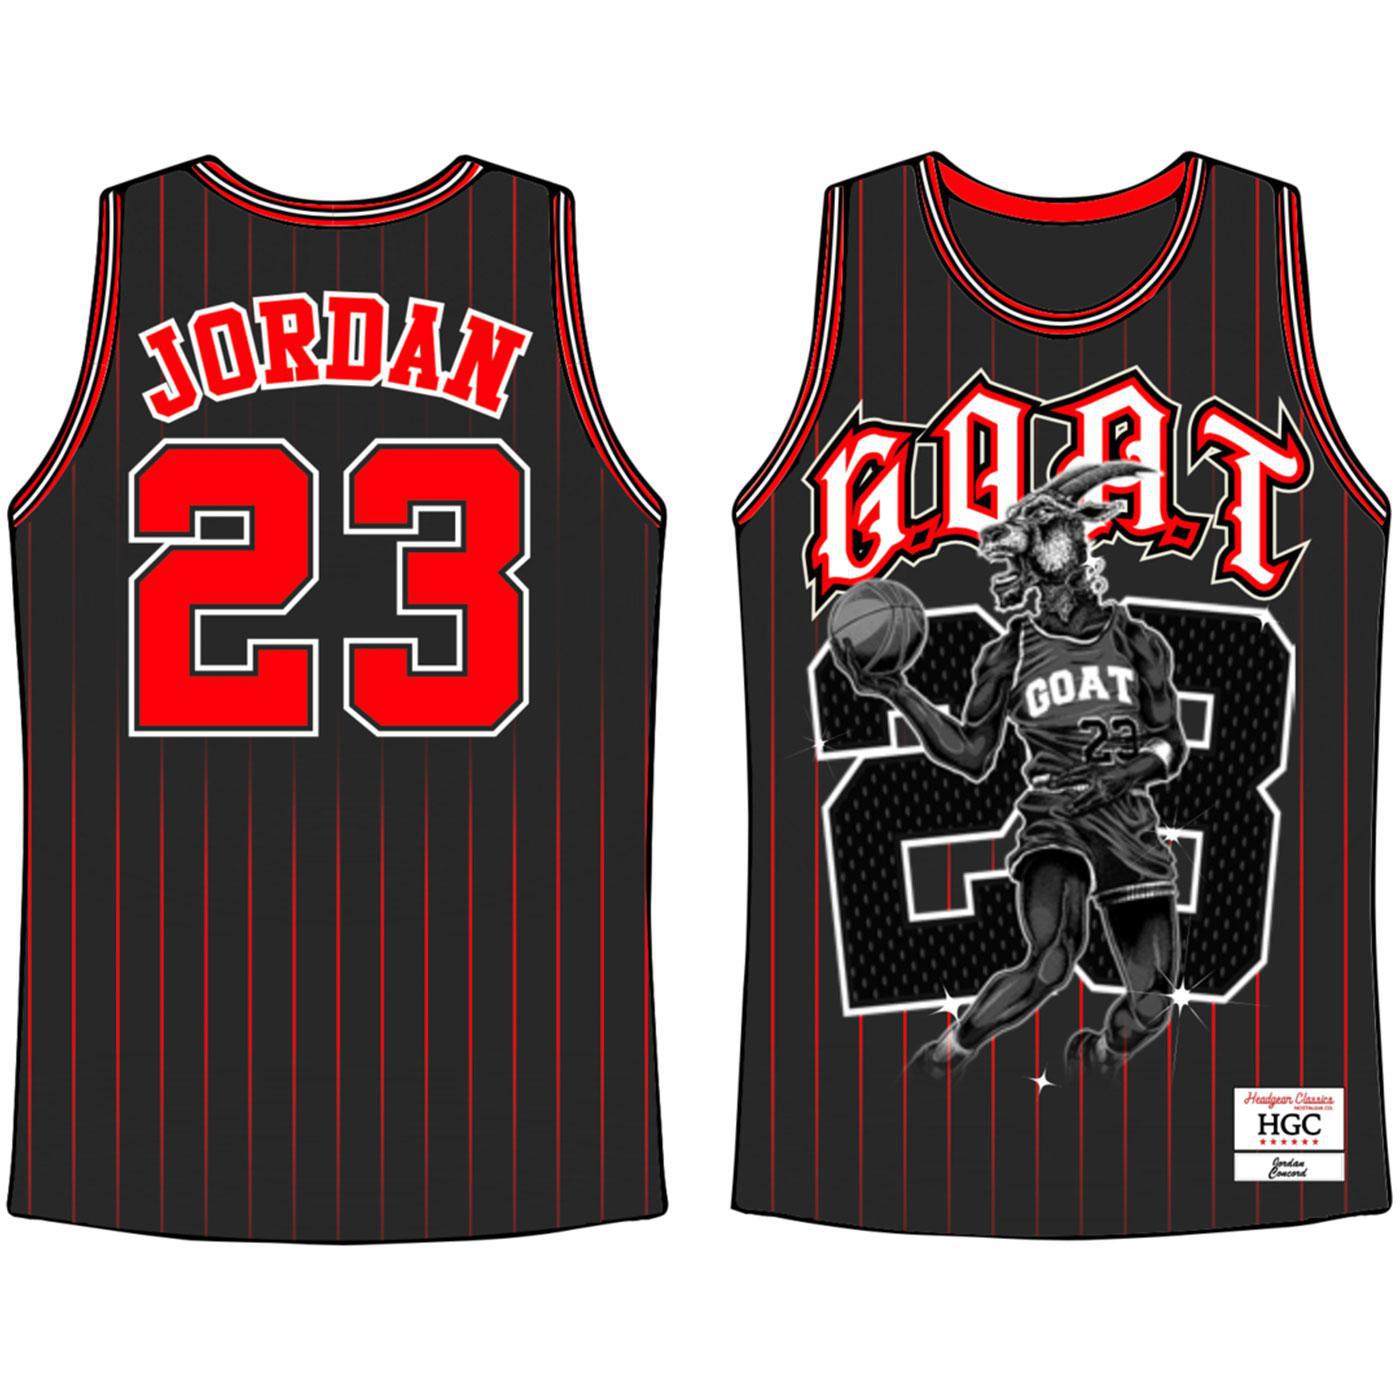 ALLSTARELITE Jordan Goat Pinstripe Basketball Jersey M / Black&Red